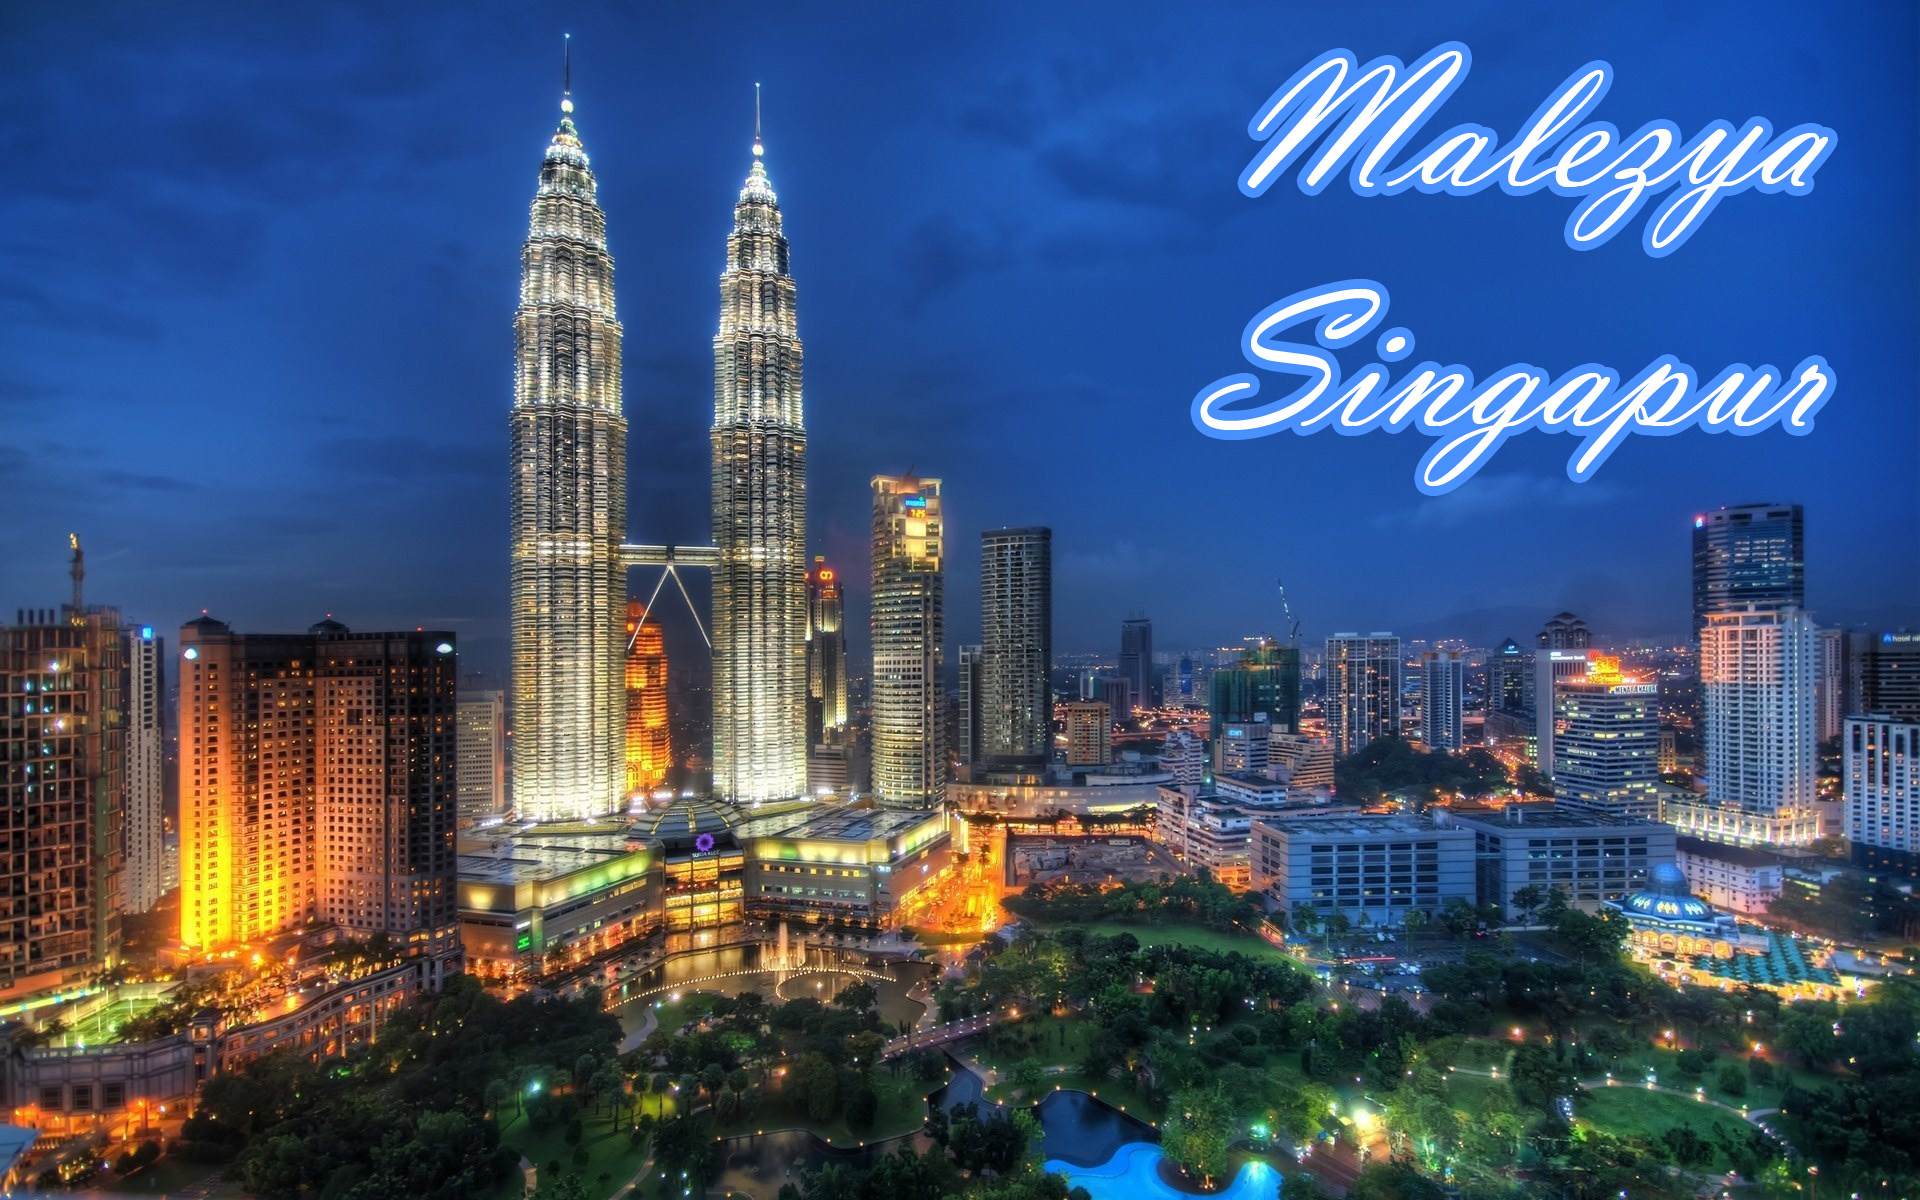 Malezya - Singapur Turu